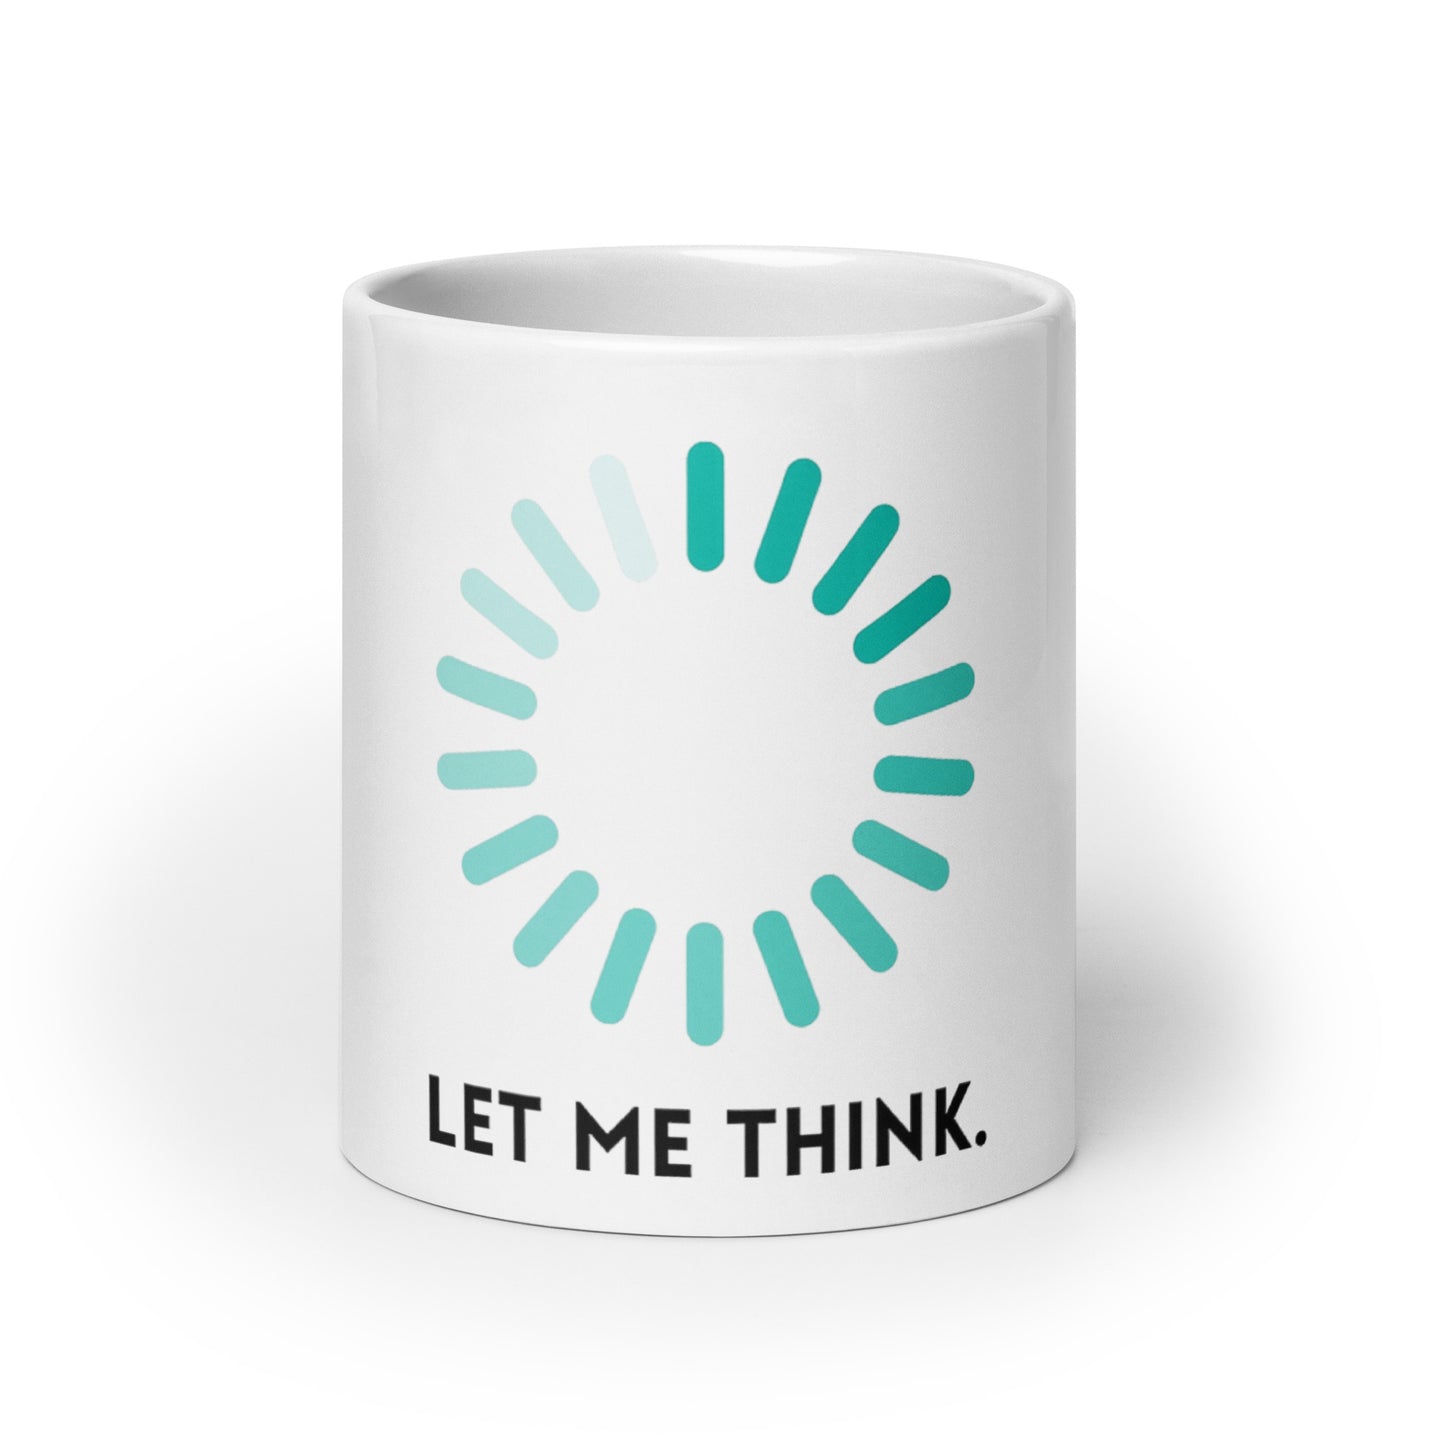 Let Me Think mug